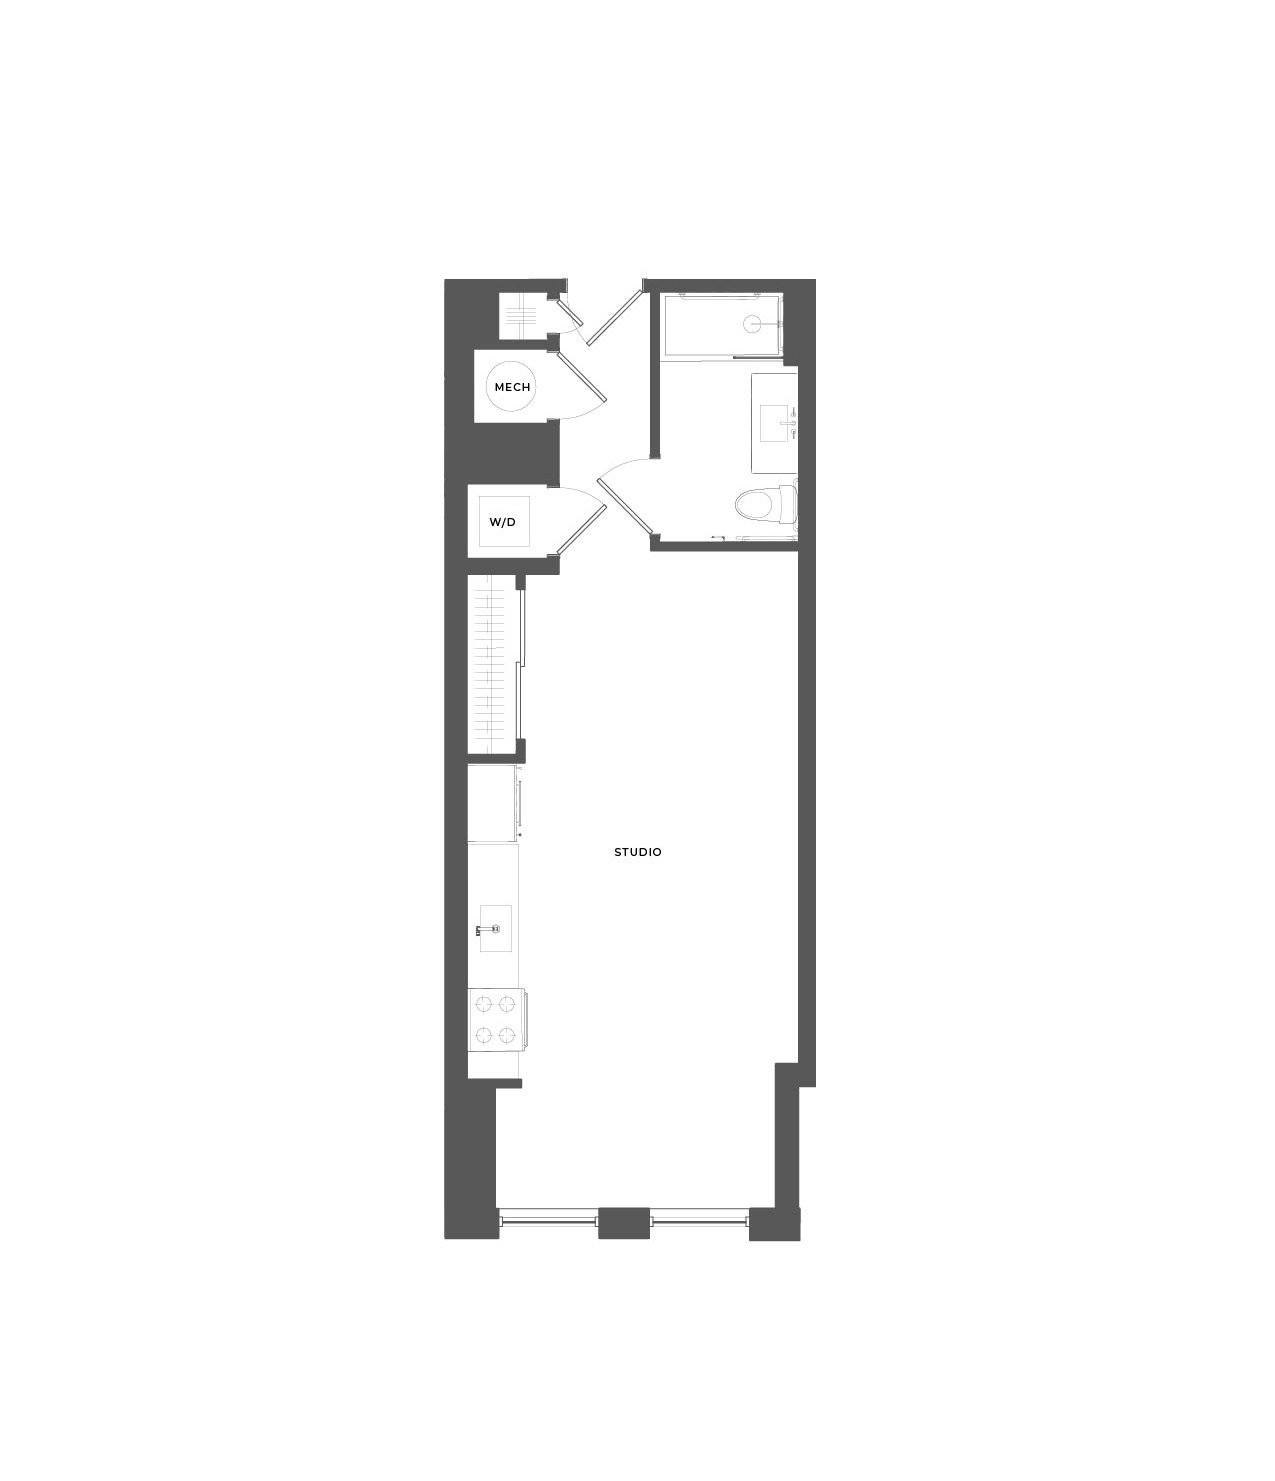 Floorplan of 0705